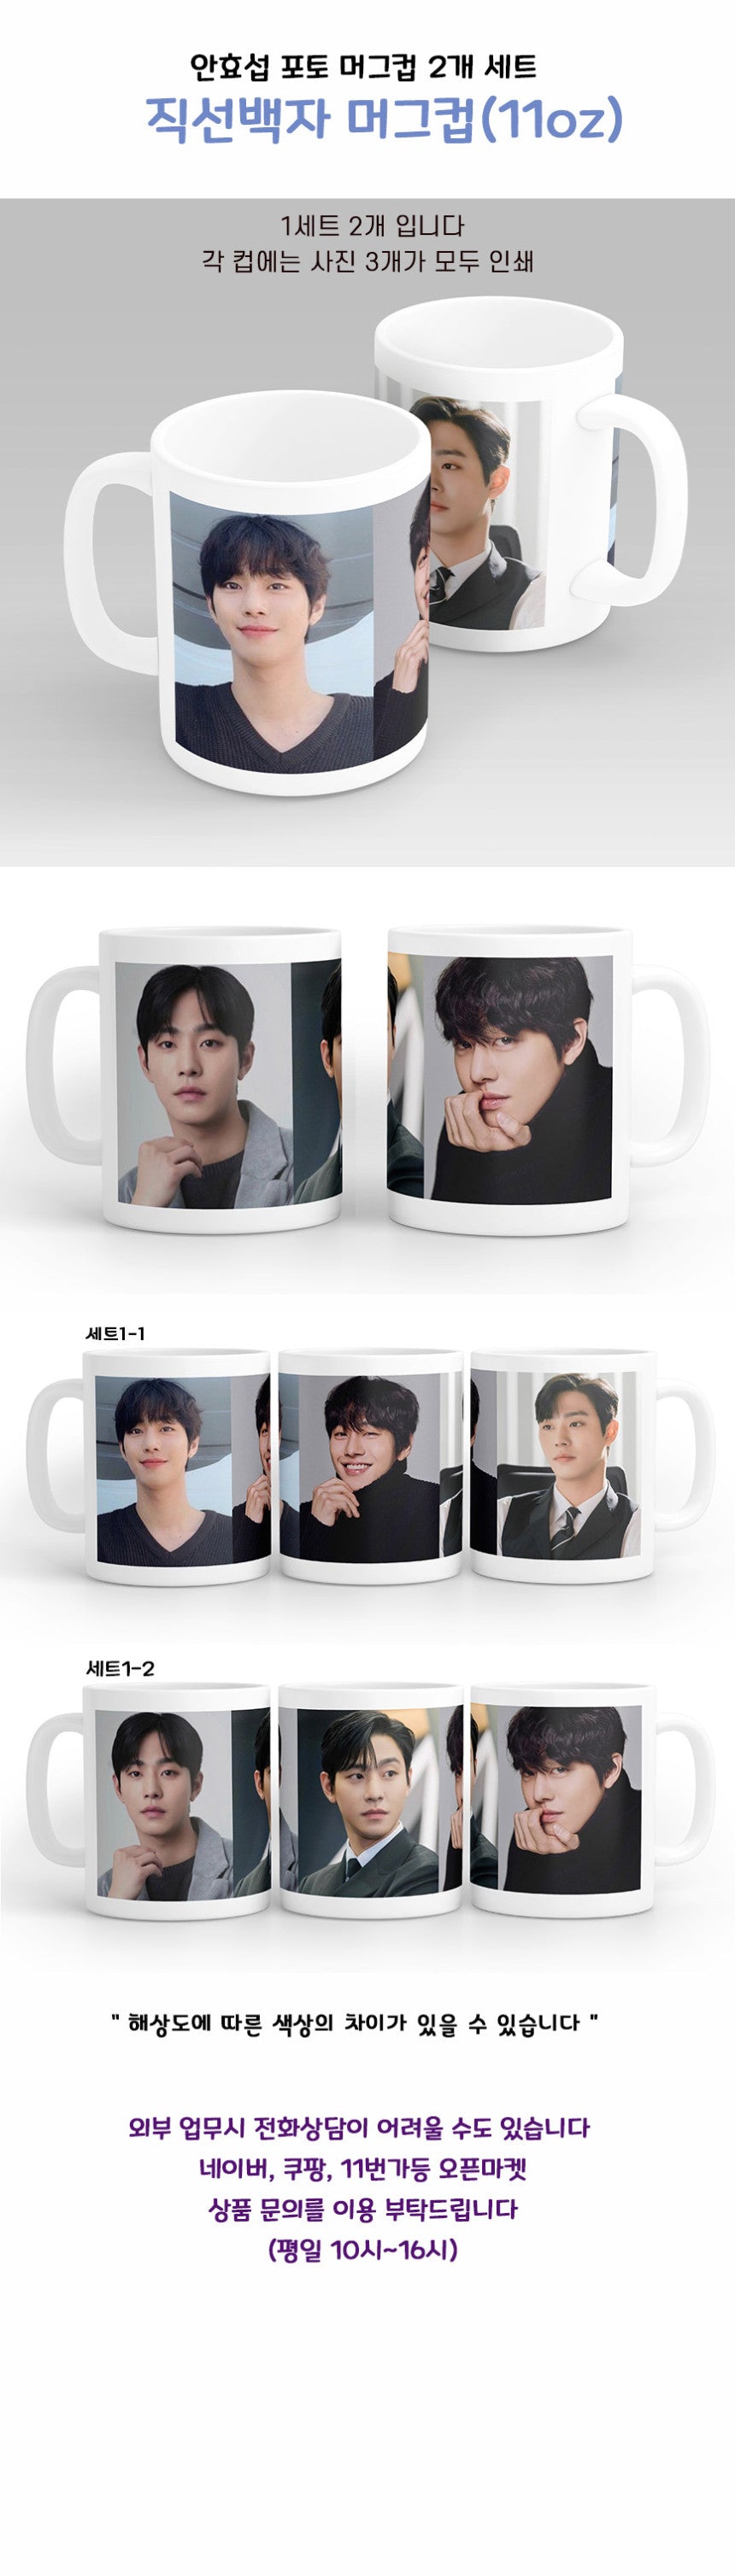 A Business Proposal Ahn Hyo Seop Goods Photo Mug Cup Set